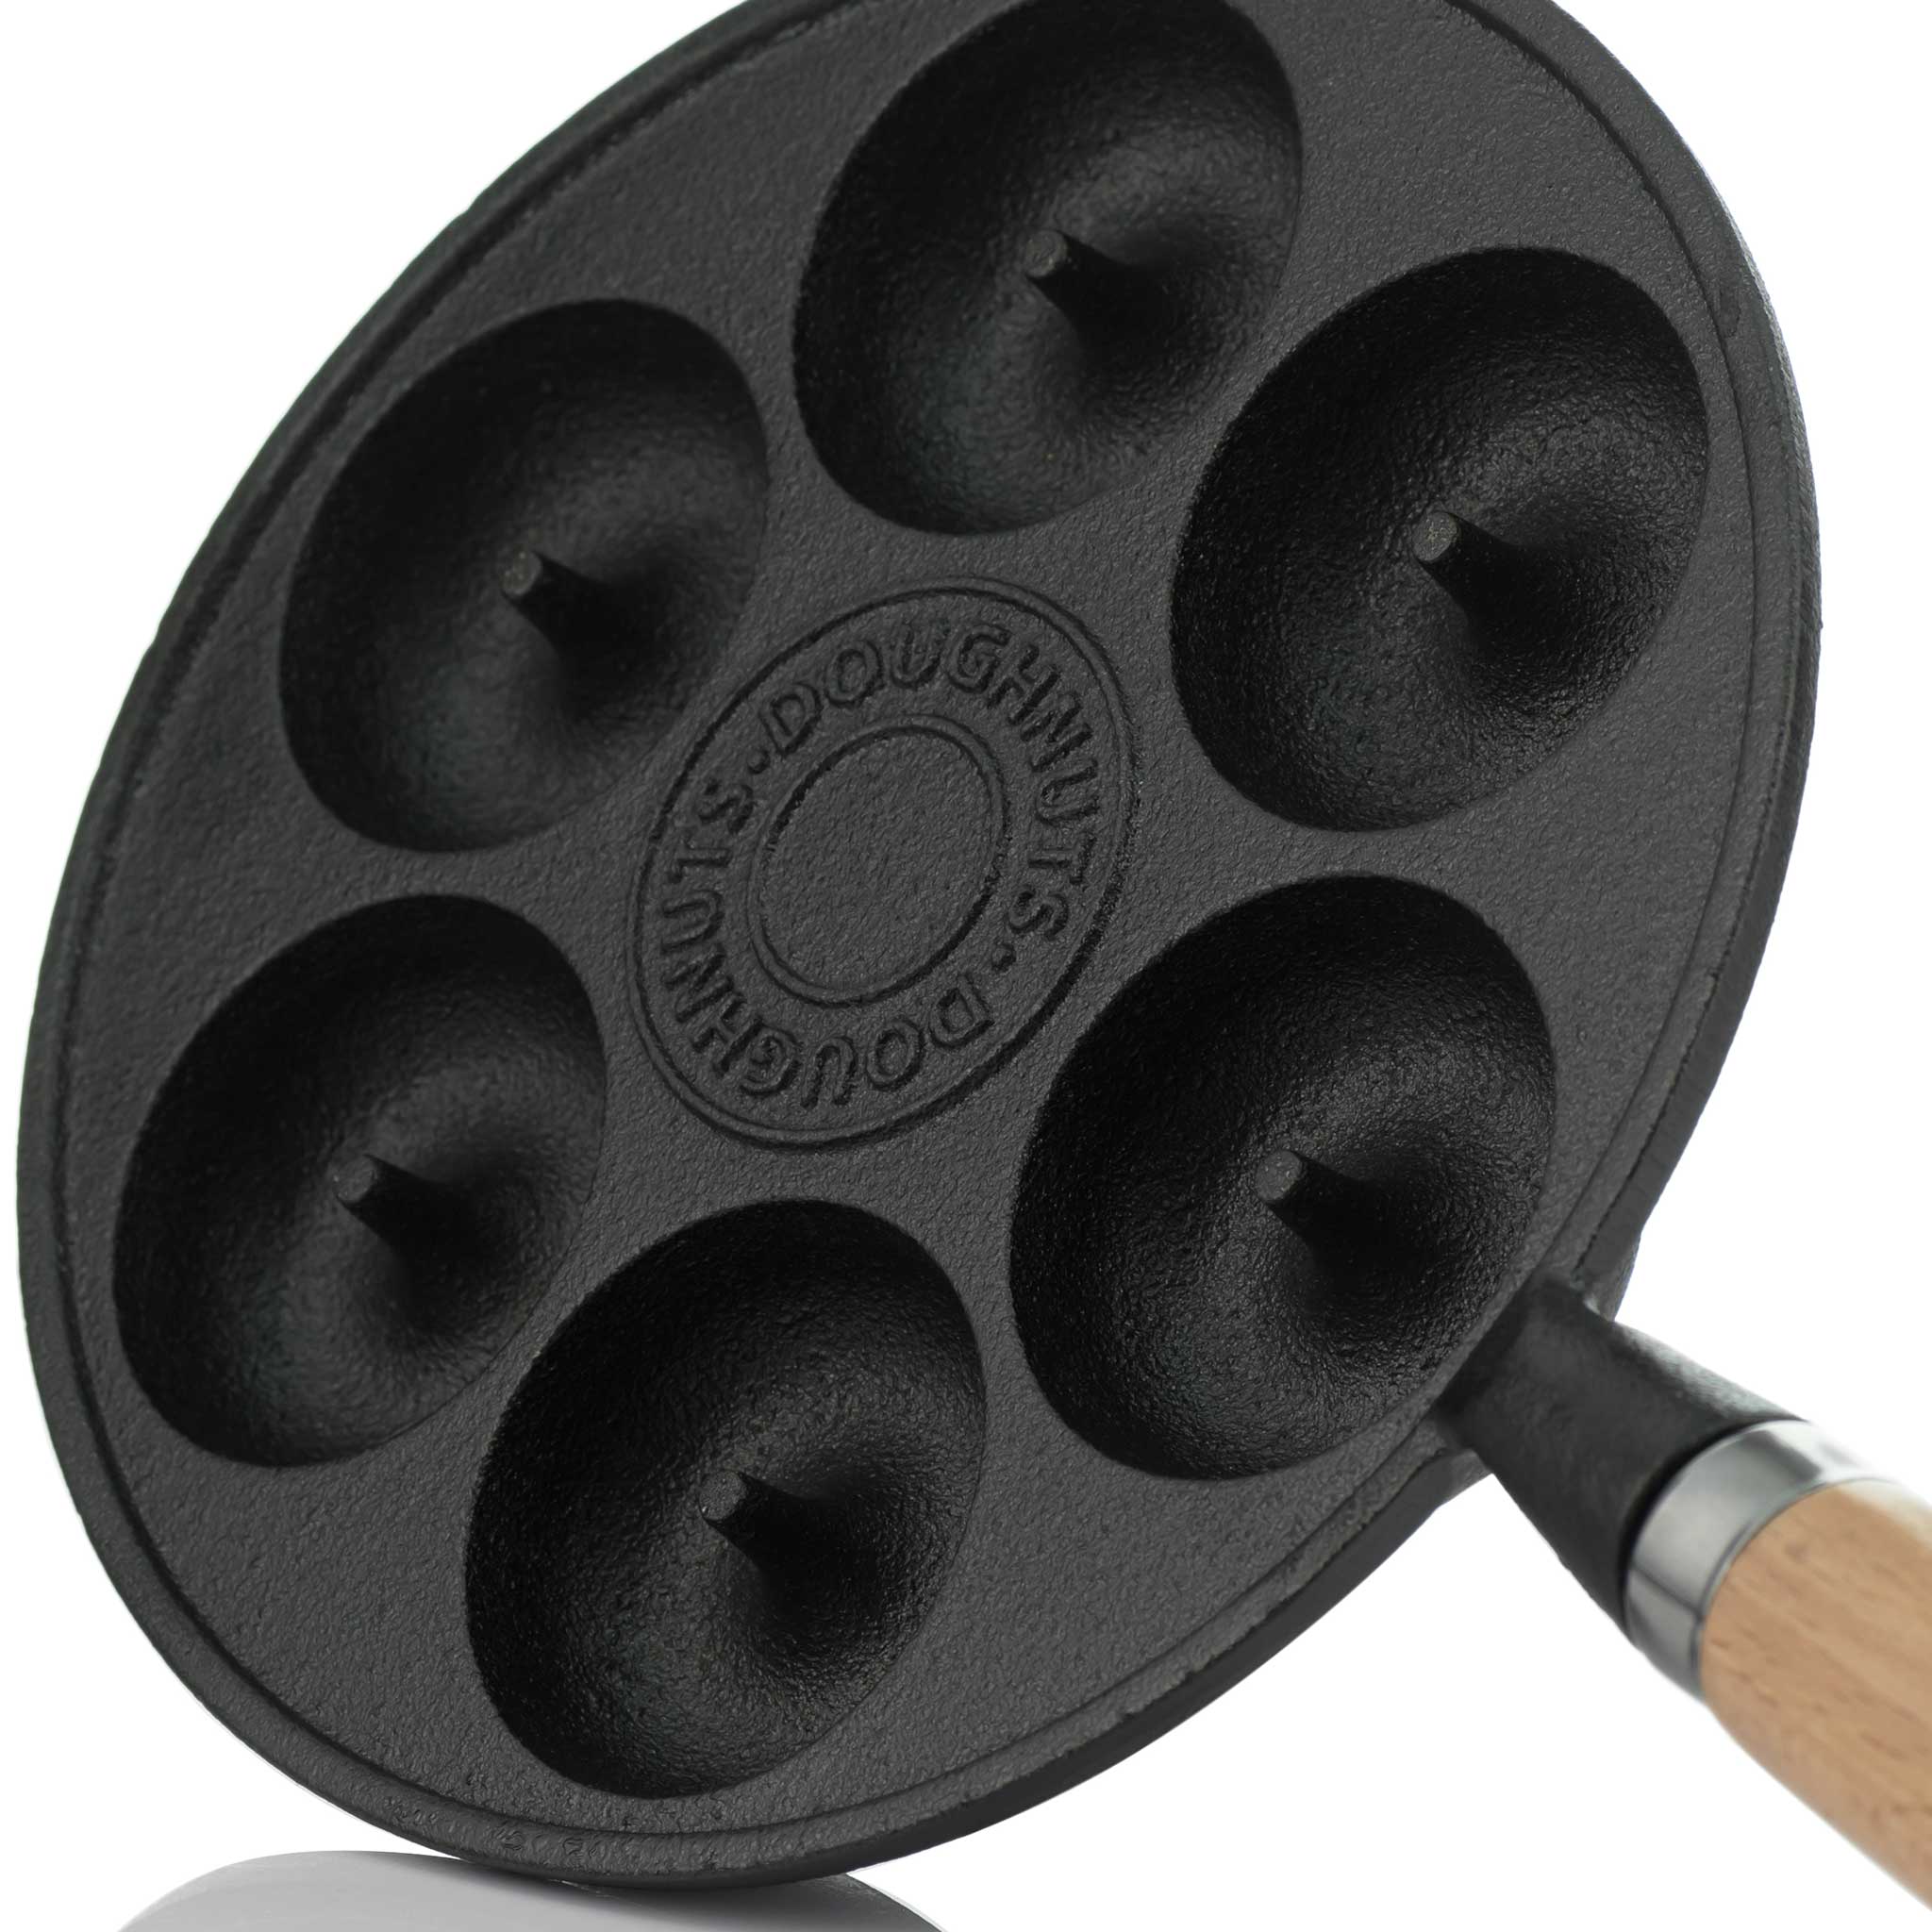 Cast iron doughnut pan with 6 rings